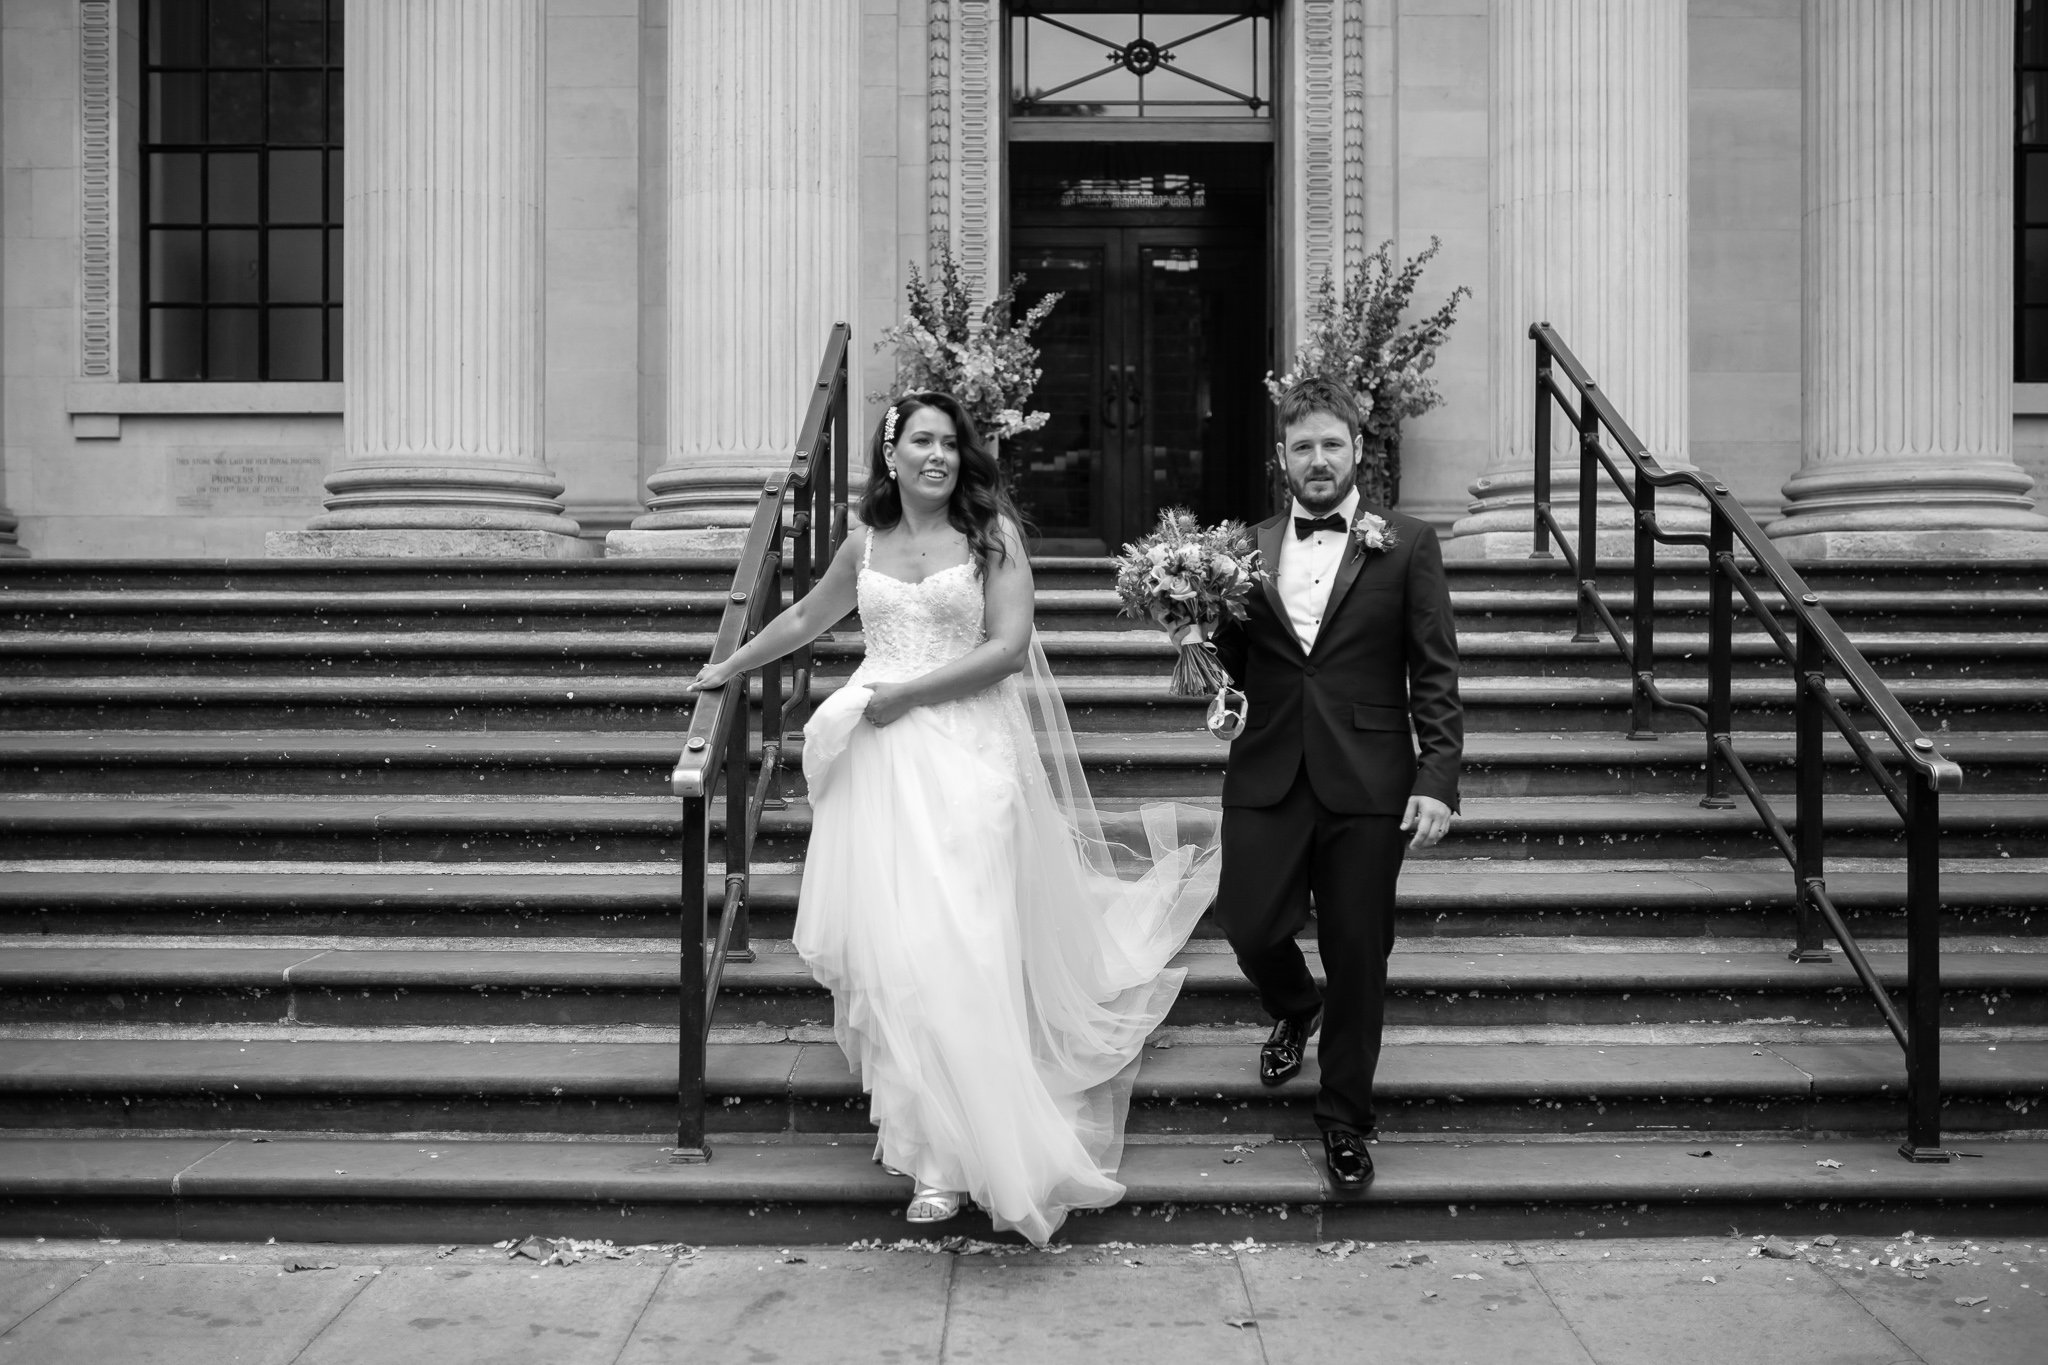 Marlebone Town Hall wedding photographer.jpg